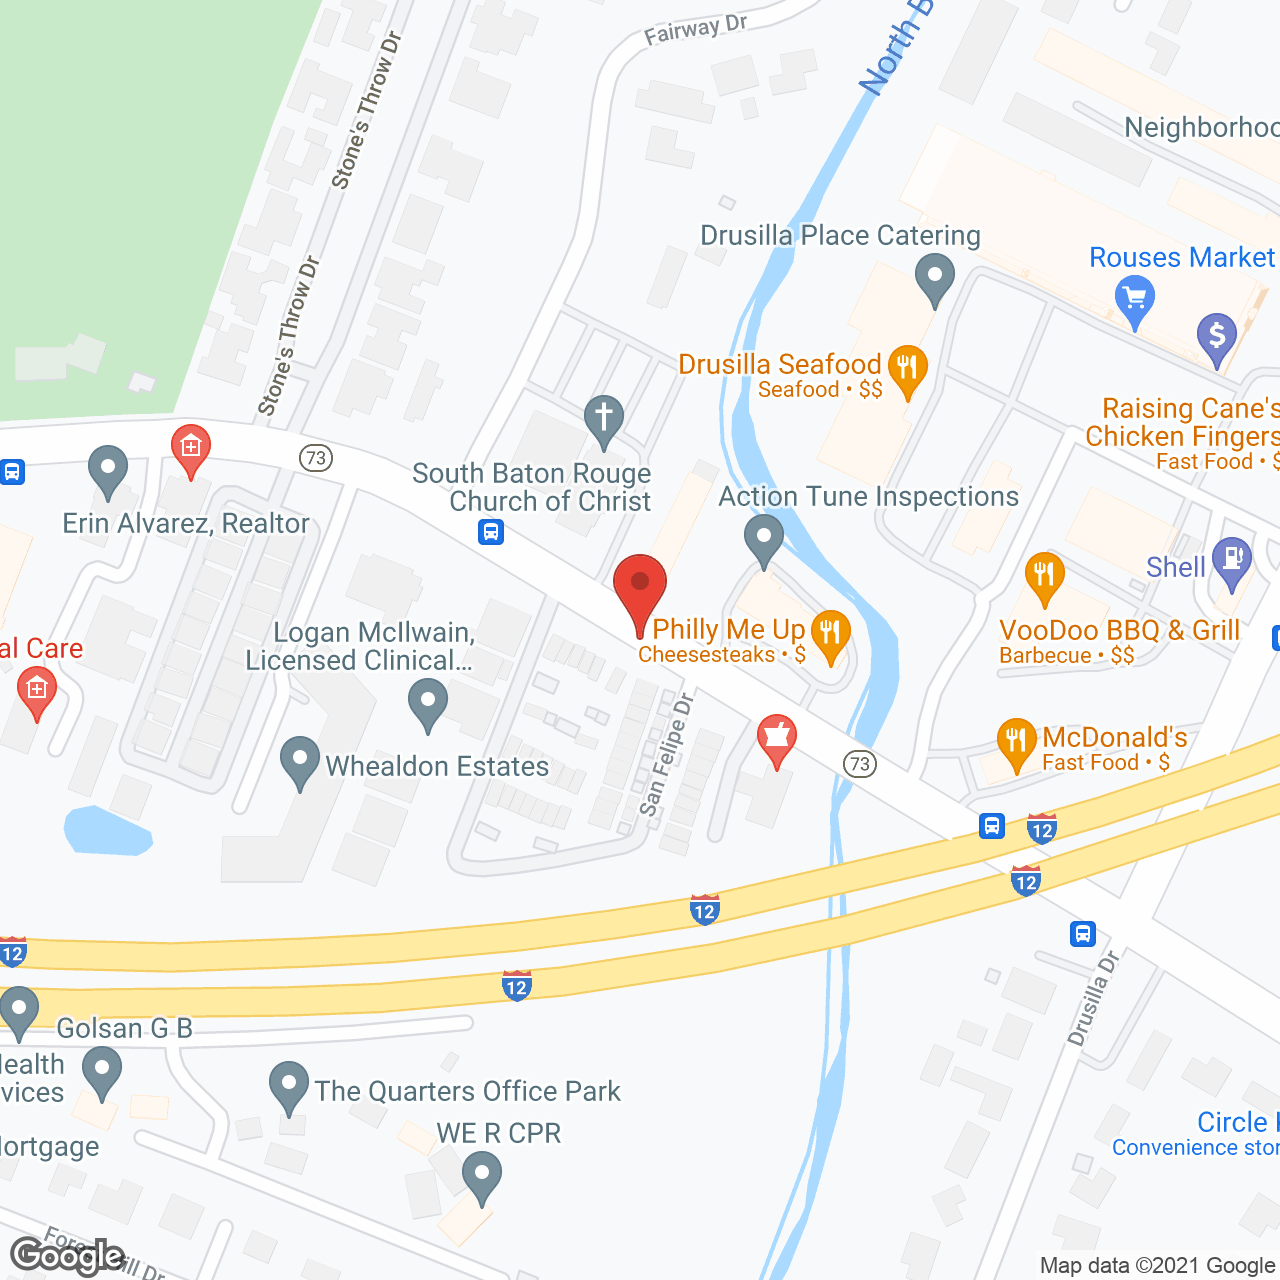 Sunrise of Baton Rouge in google map